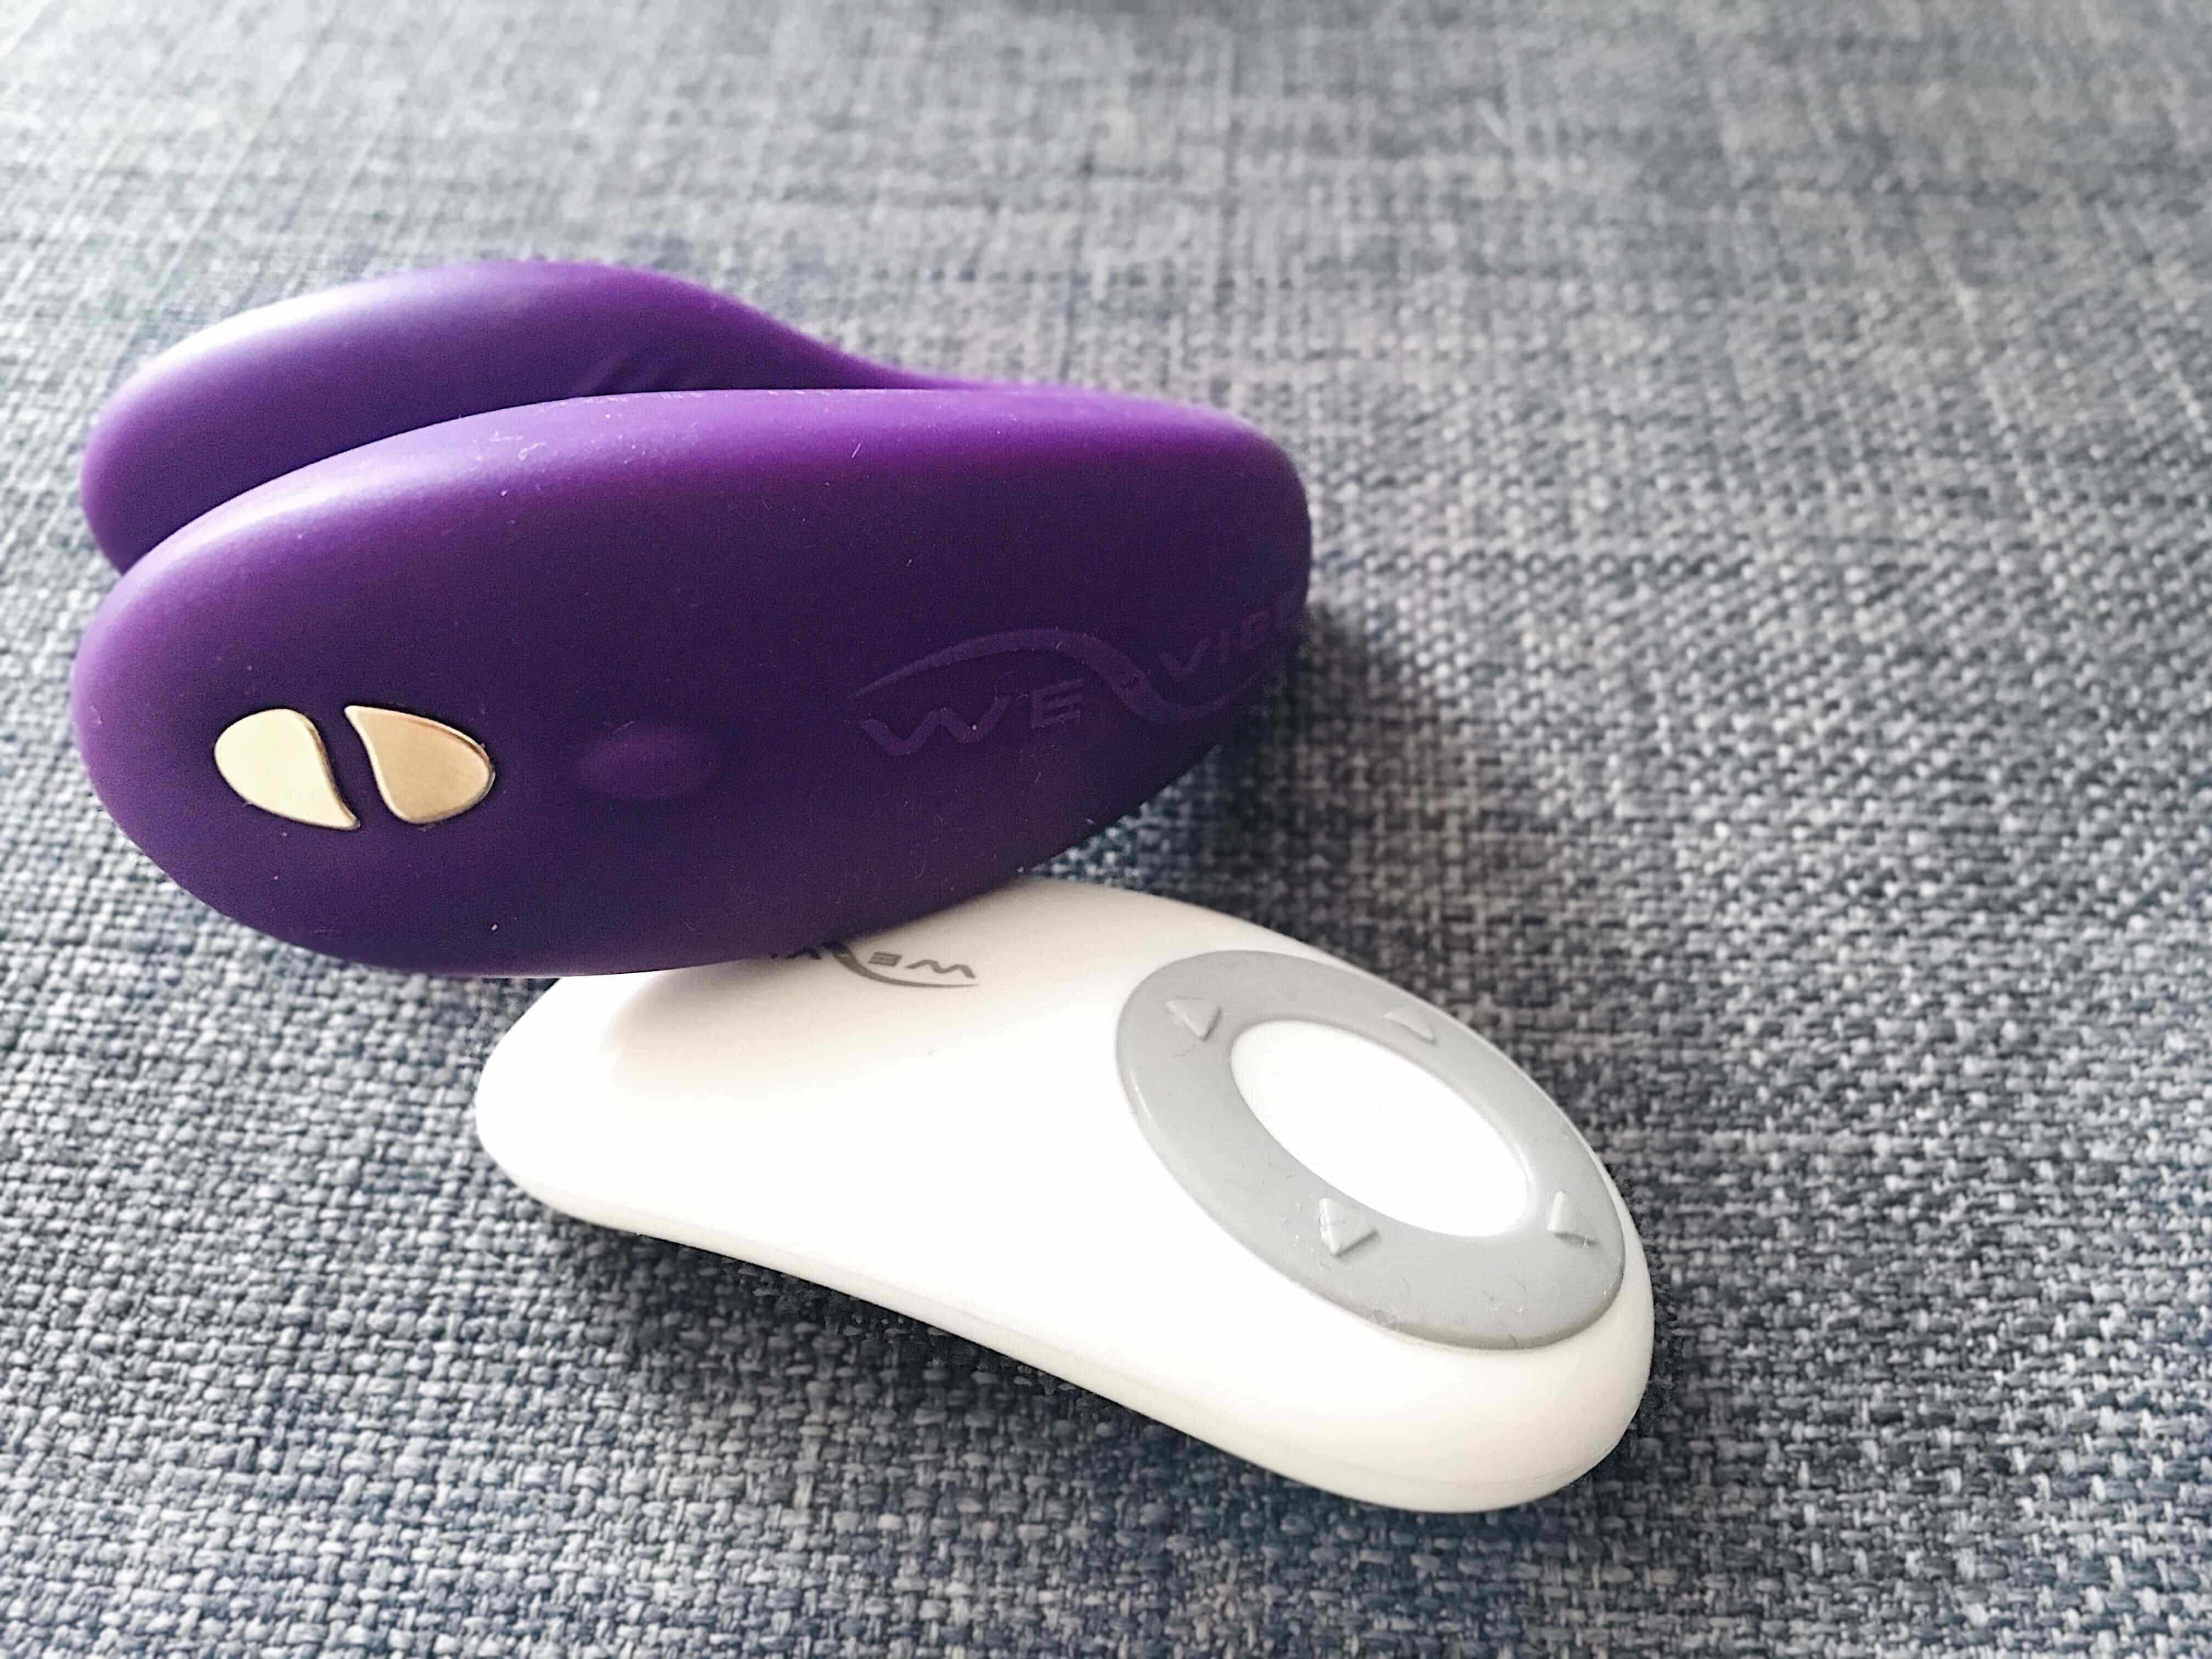 TIS Teknolojik's Audio-Tech Adult Toys – Moan to Your Favorite Tunes